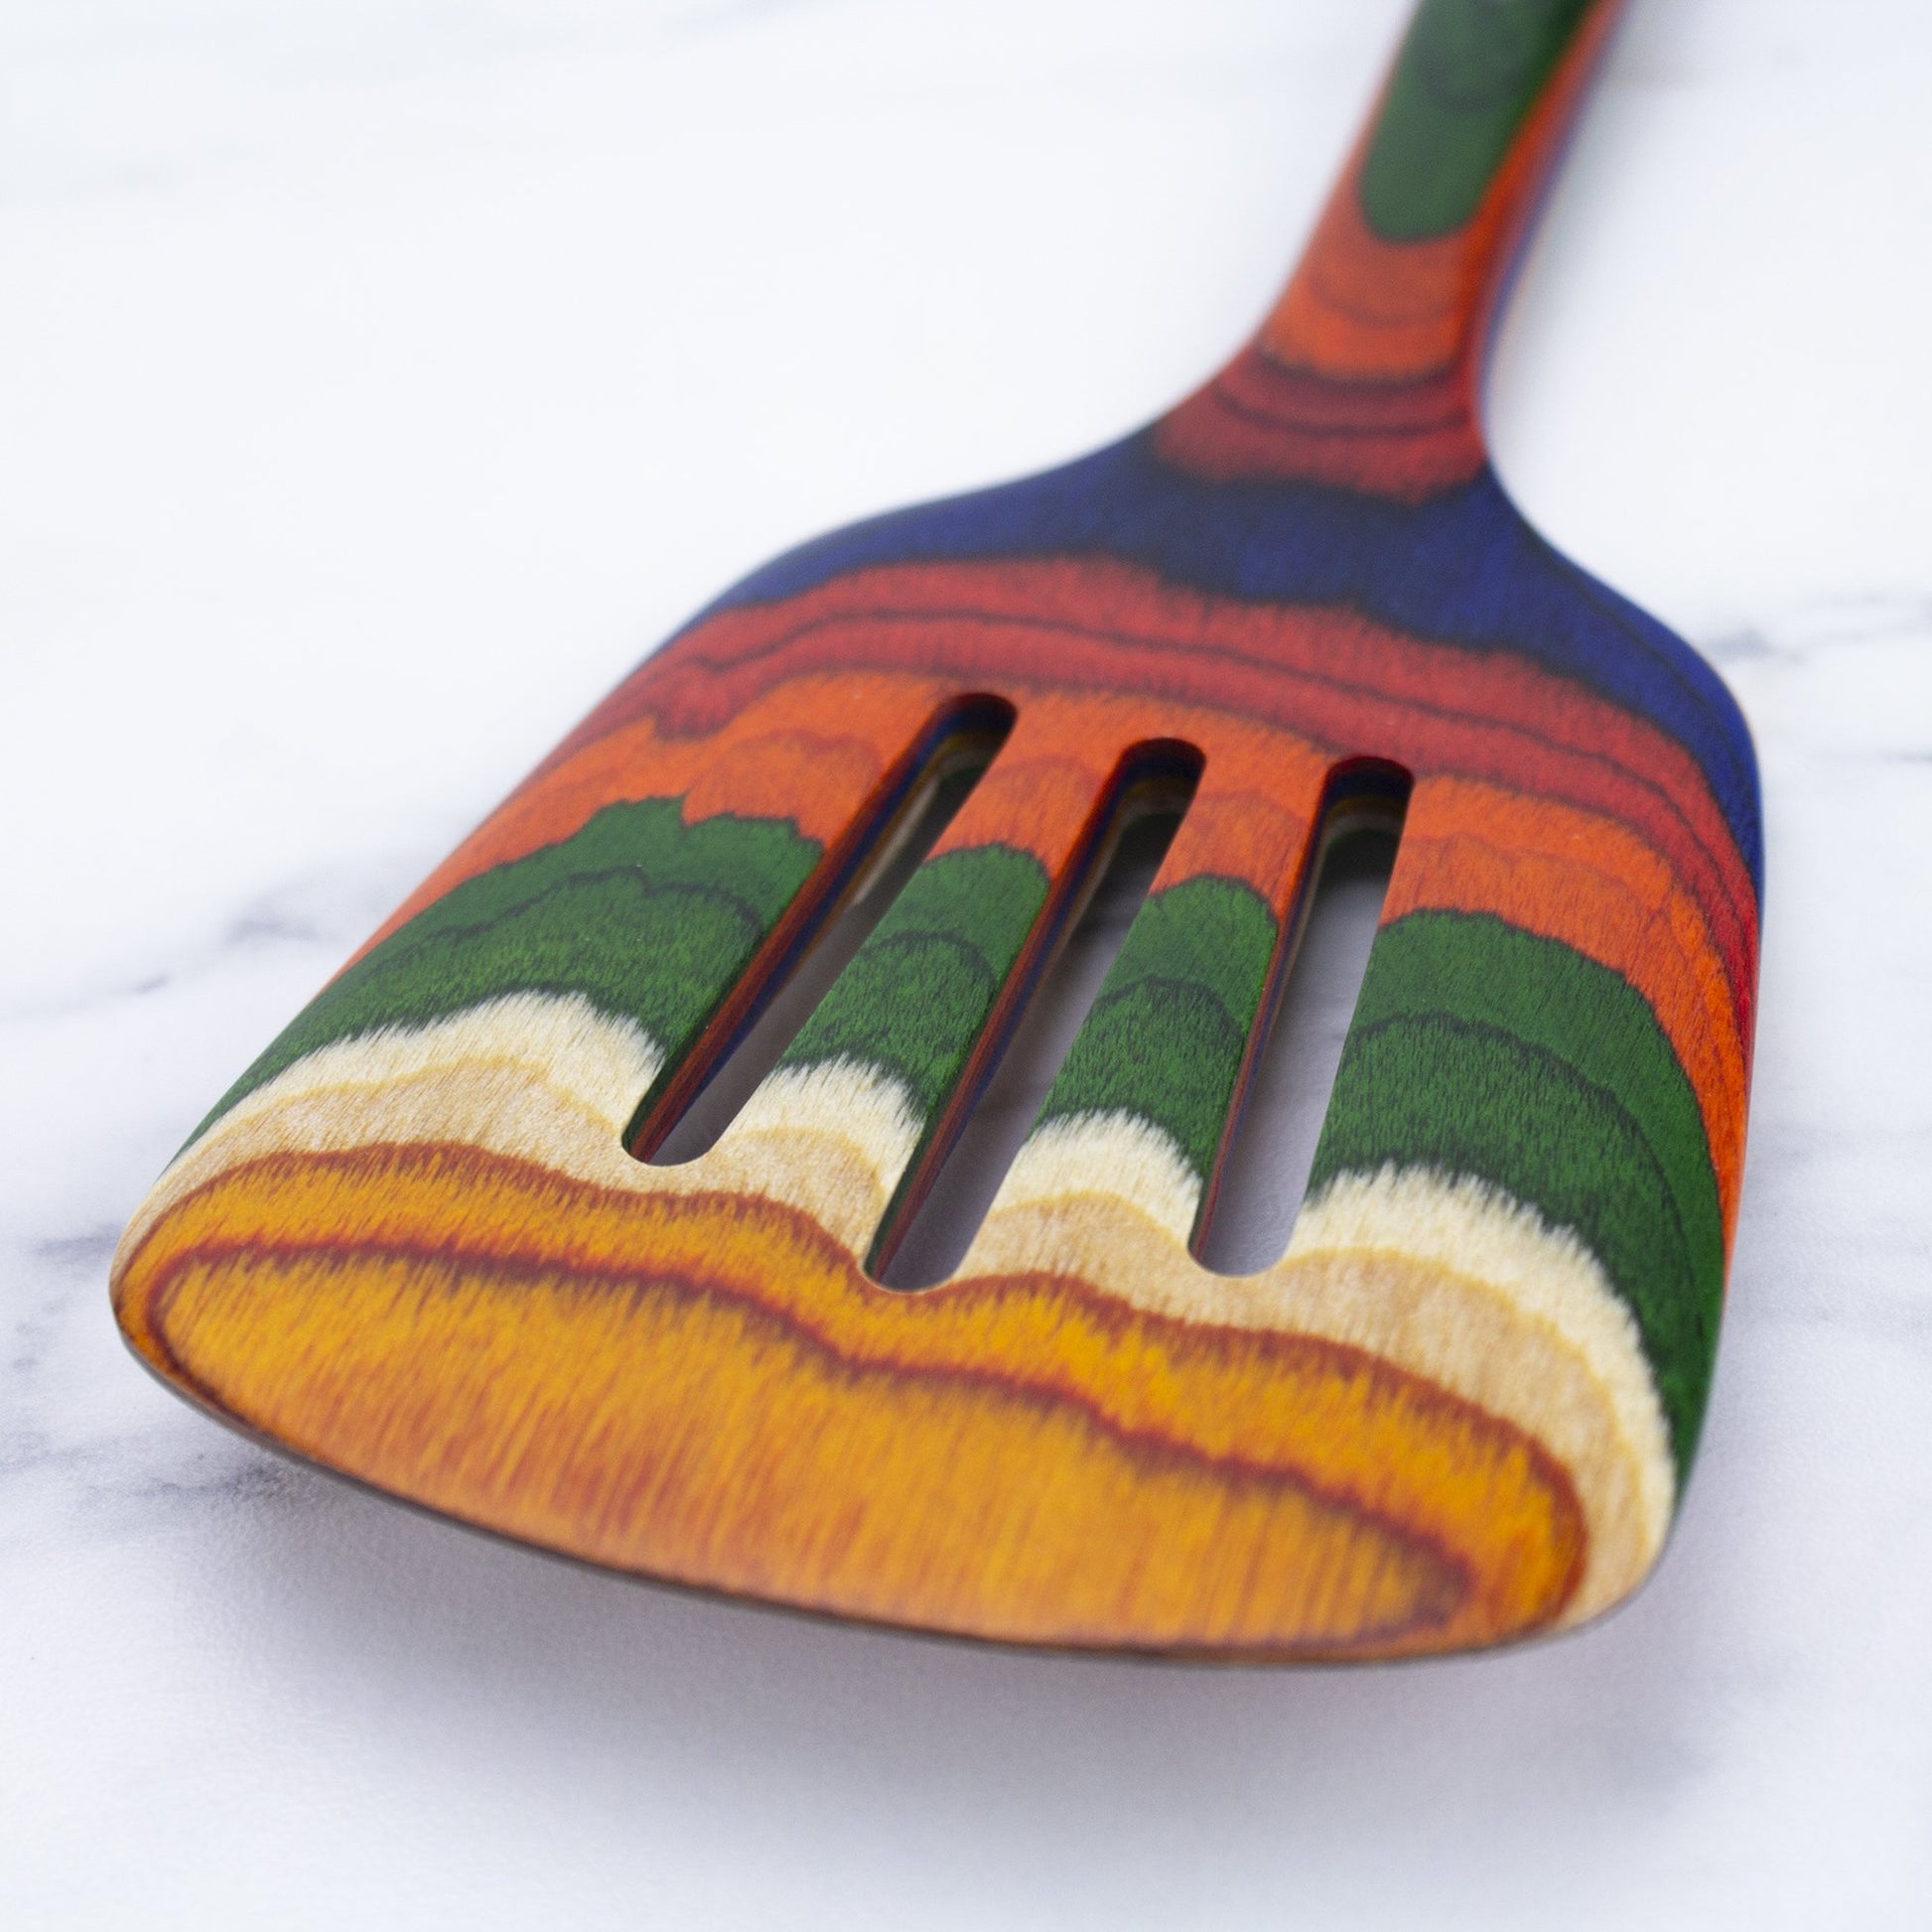 close-up view of spatula.